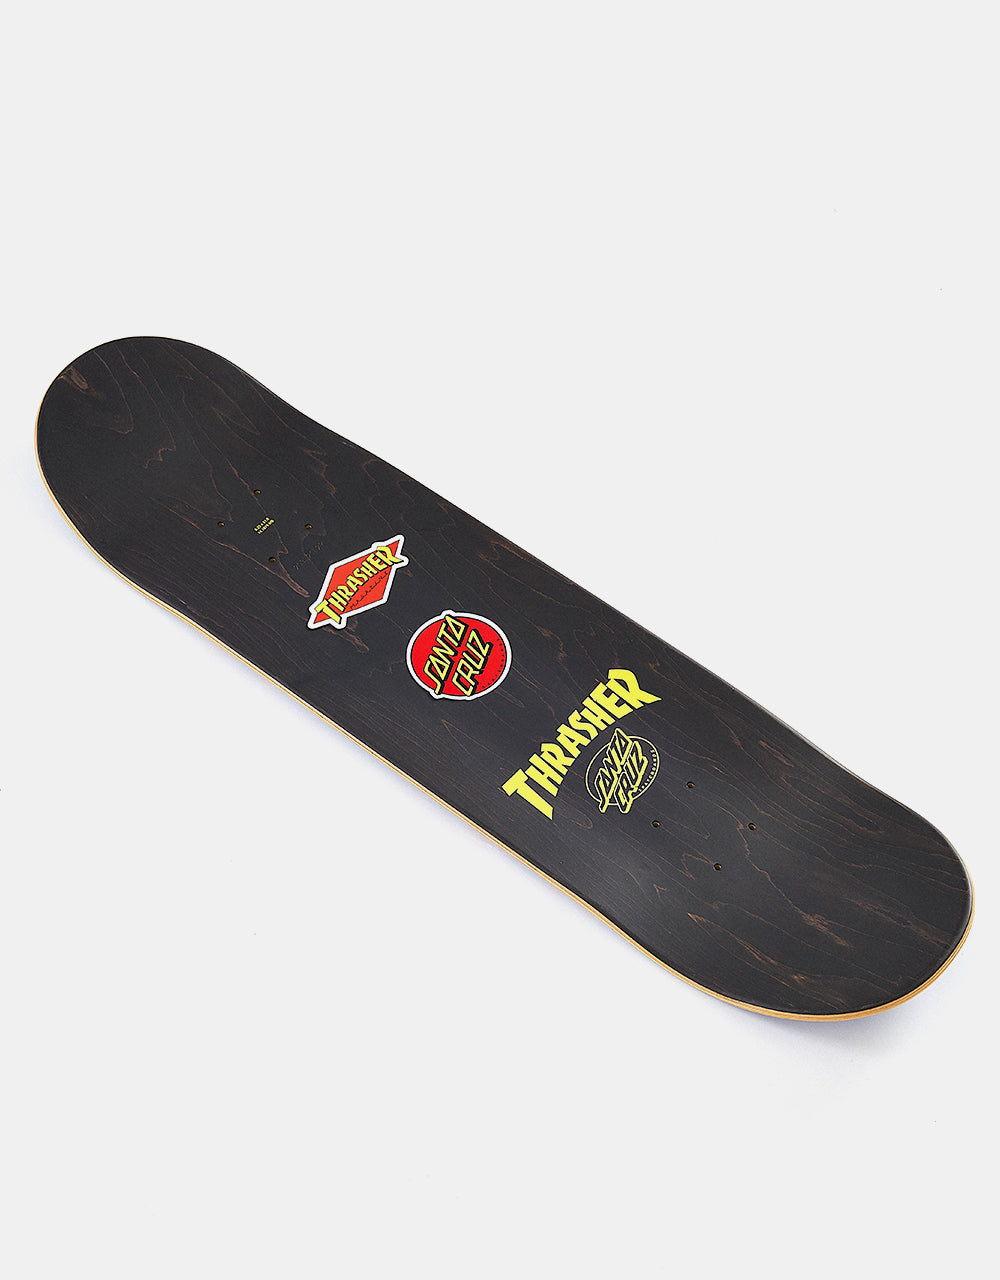 Santa Cruz x Thrasher Screaming Flame Logo Skateboard Deck - 8.25"